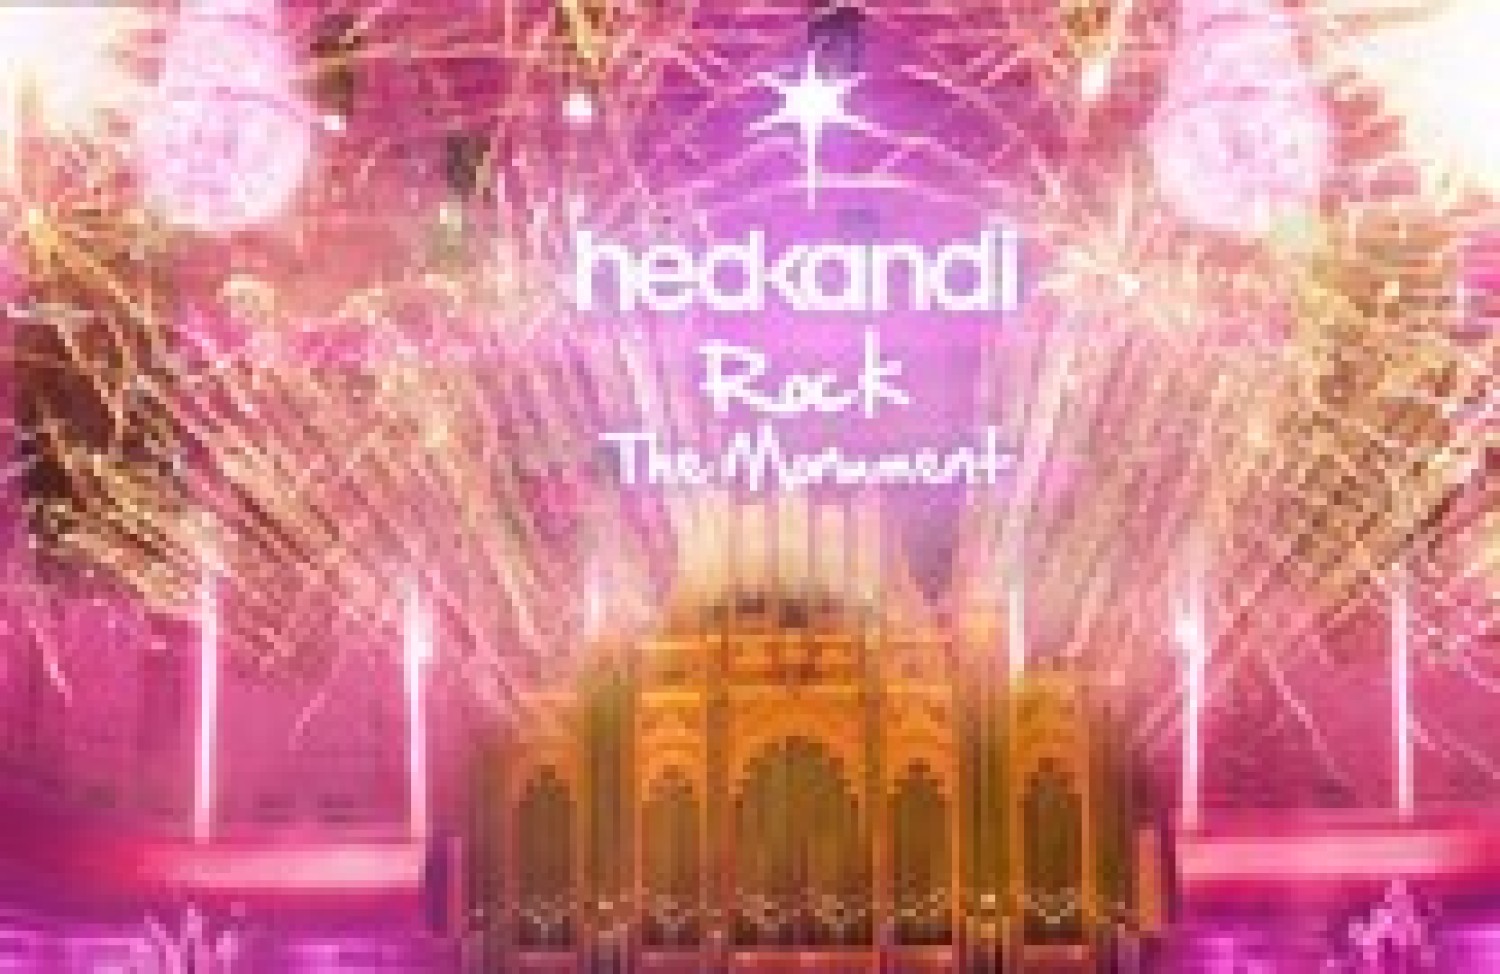 Party nieuws: Hed Kandi will rock Philharmonie Haarlem!